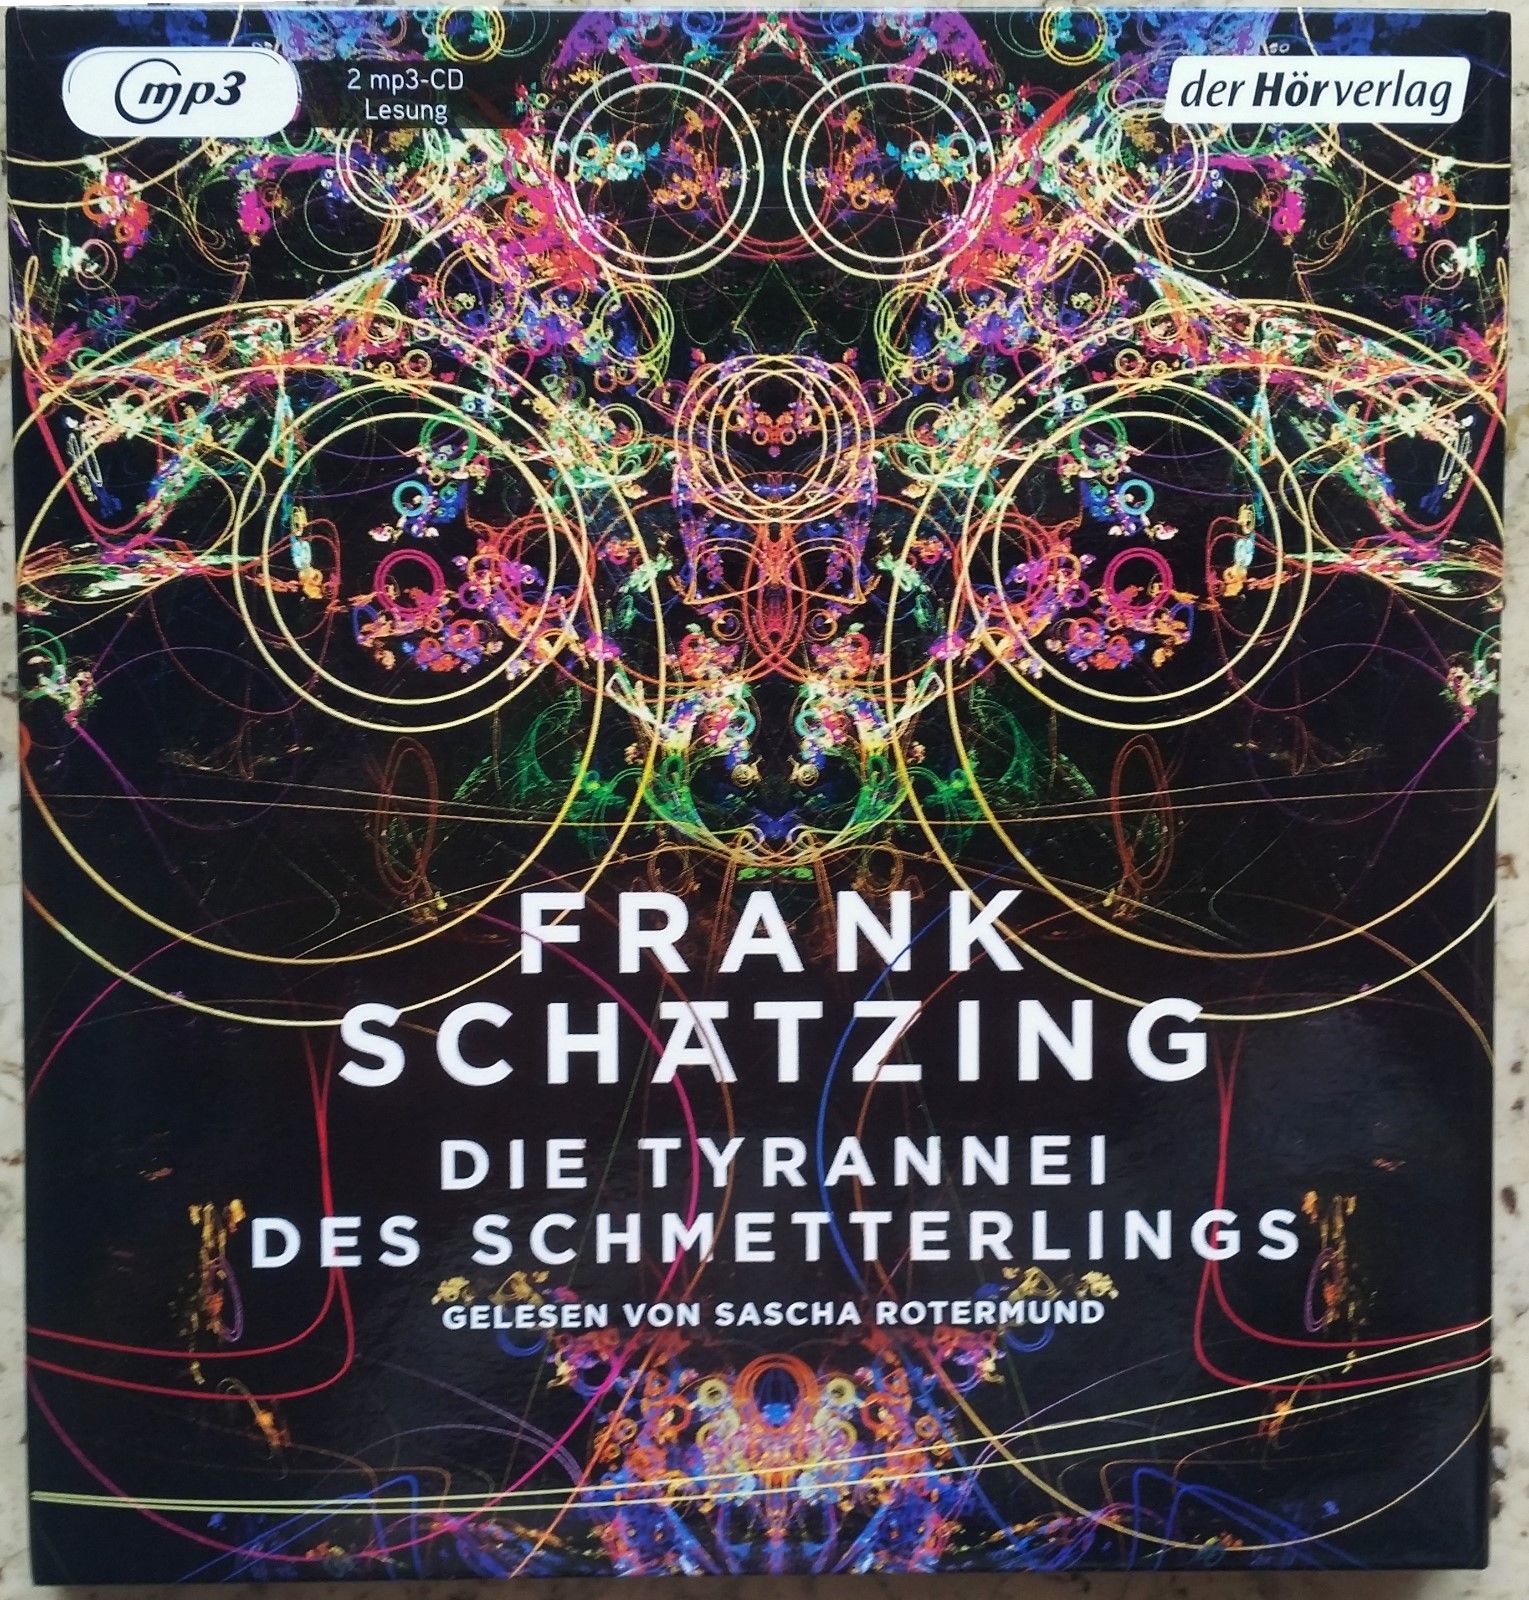 Die Tyrannei des Schmetterlings - Frank Schätzing (2018) mp3 CD